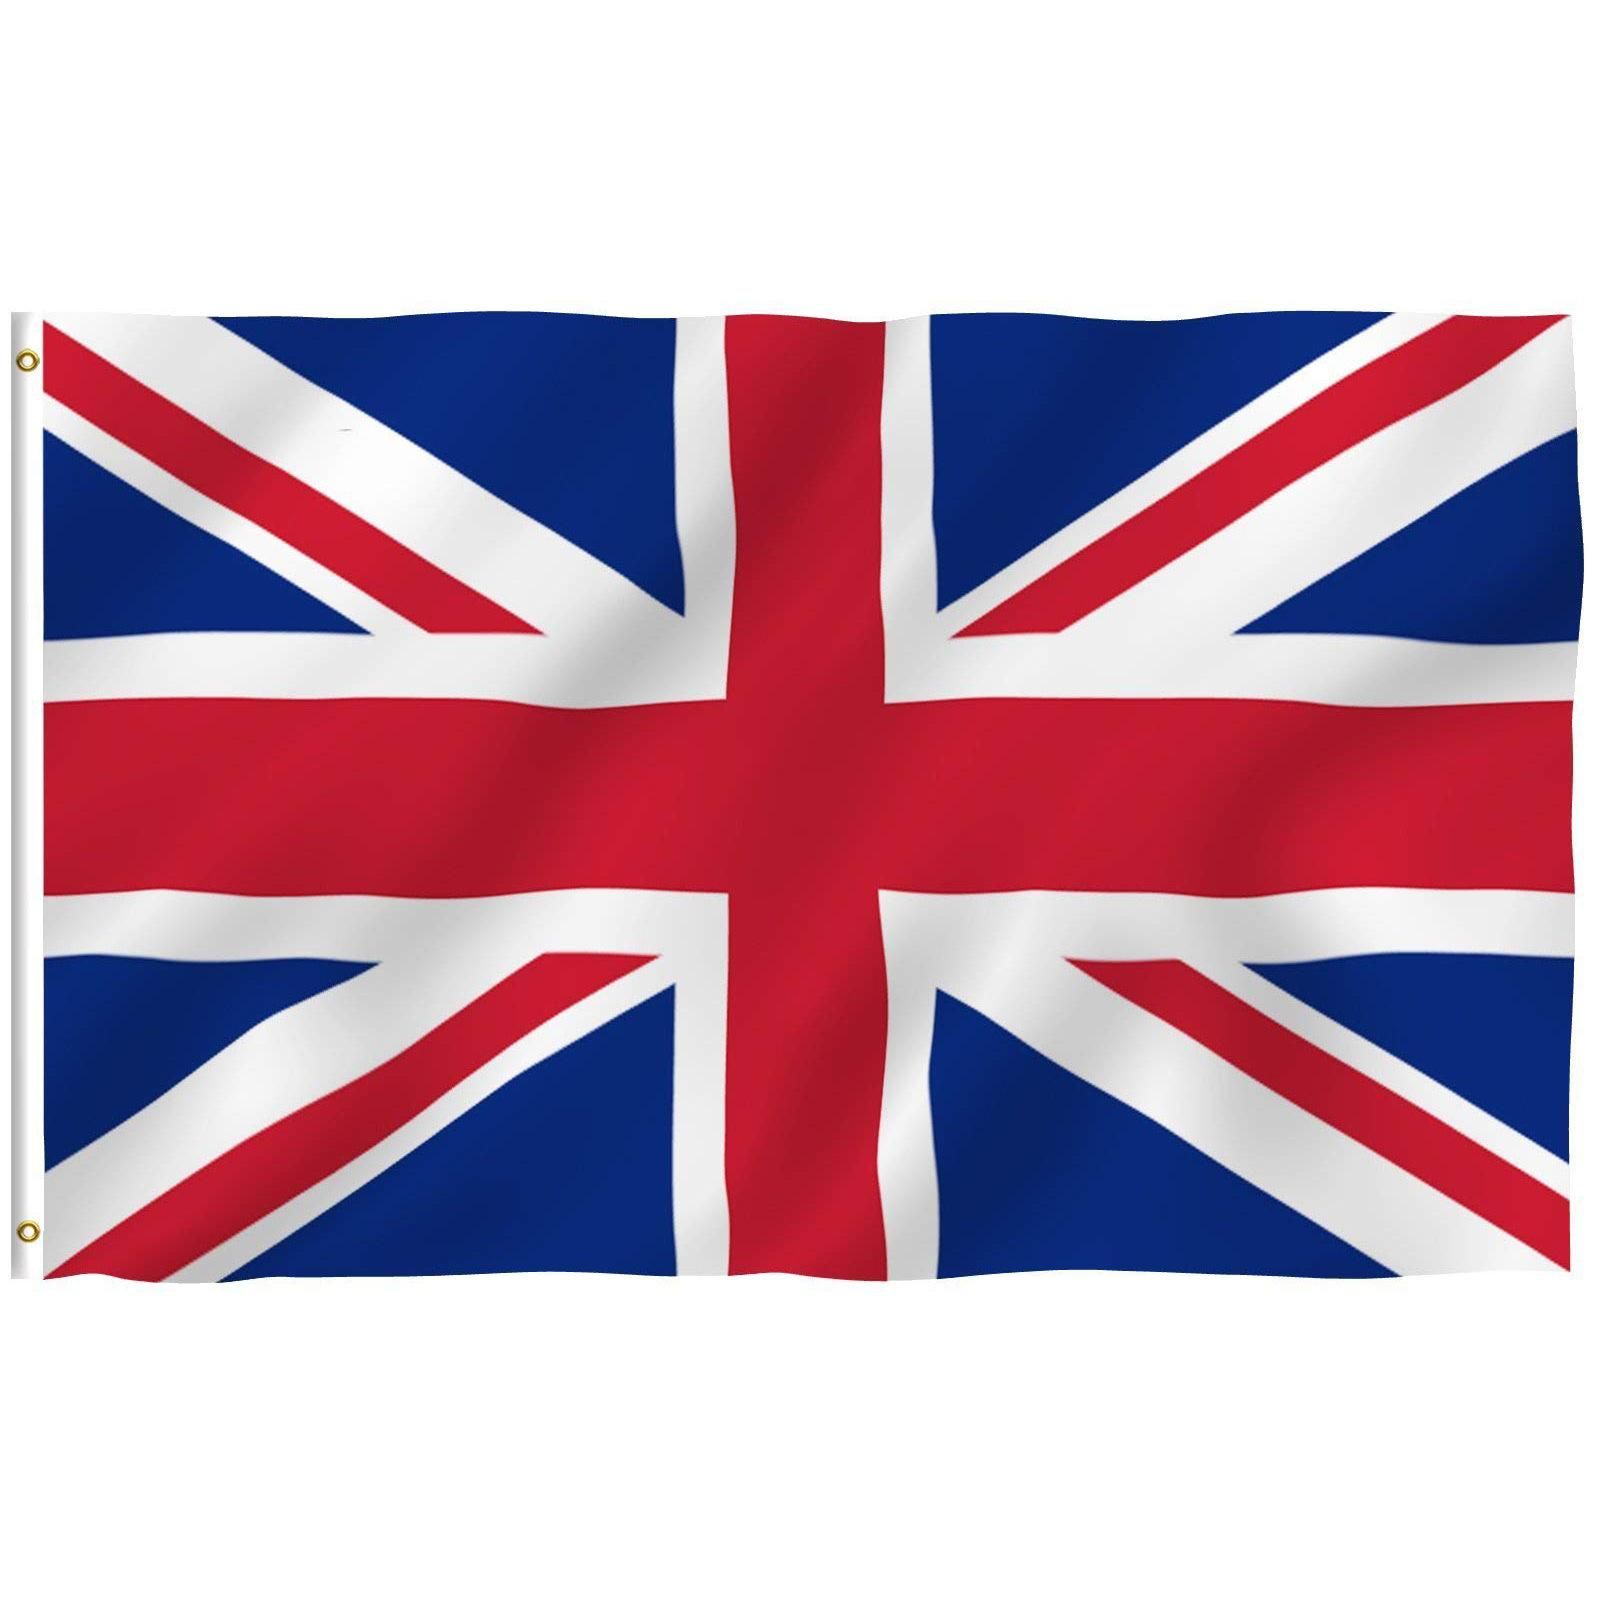 Brits